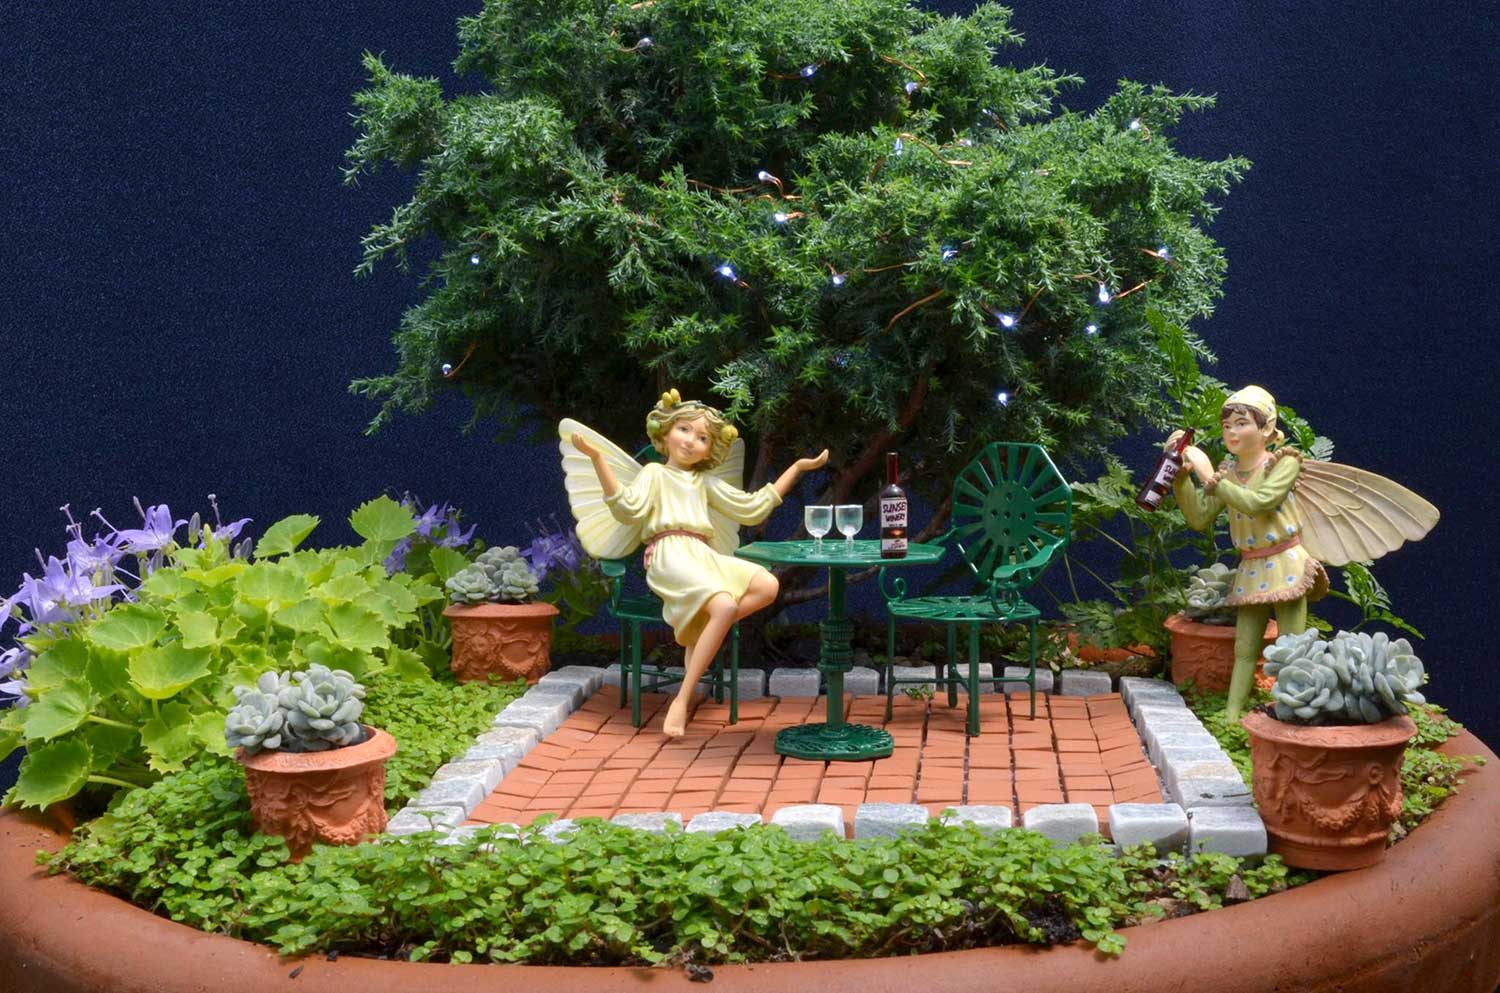 Enchanted Miniature Fairy Gardens